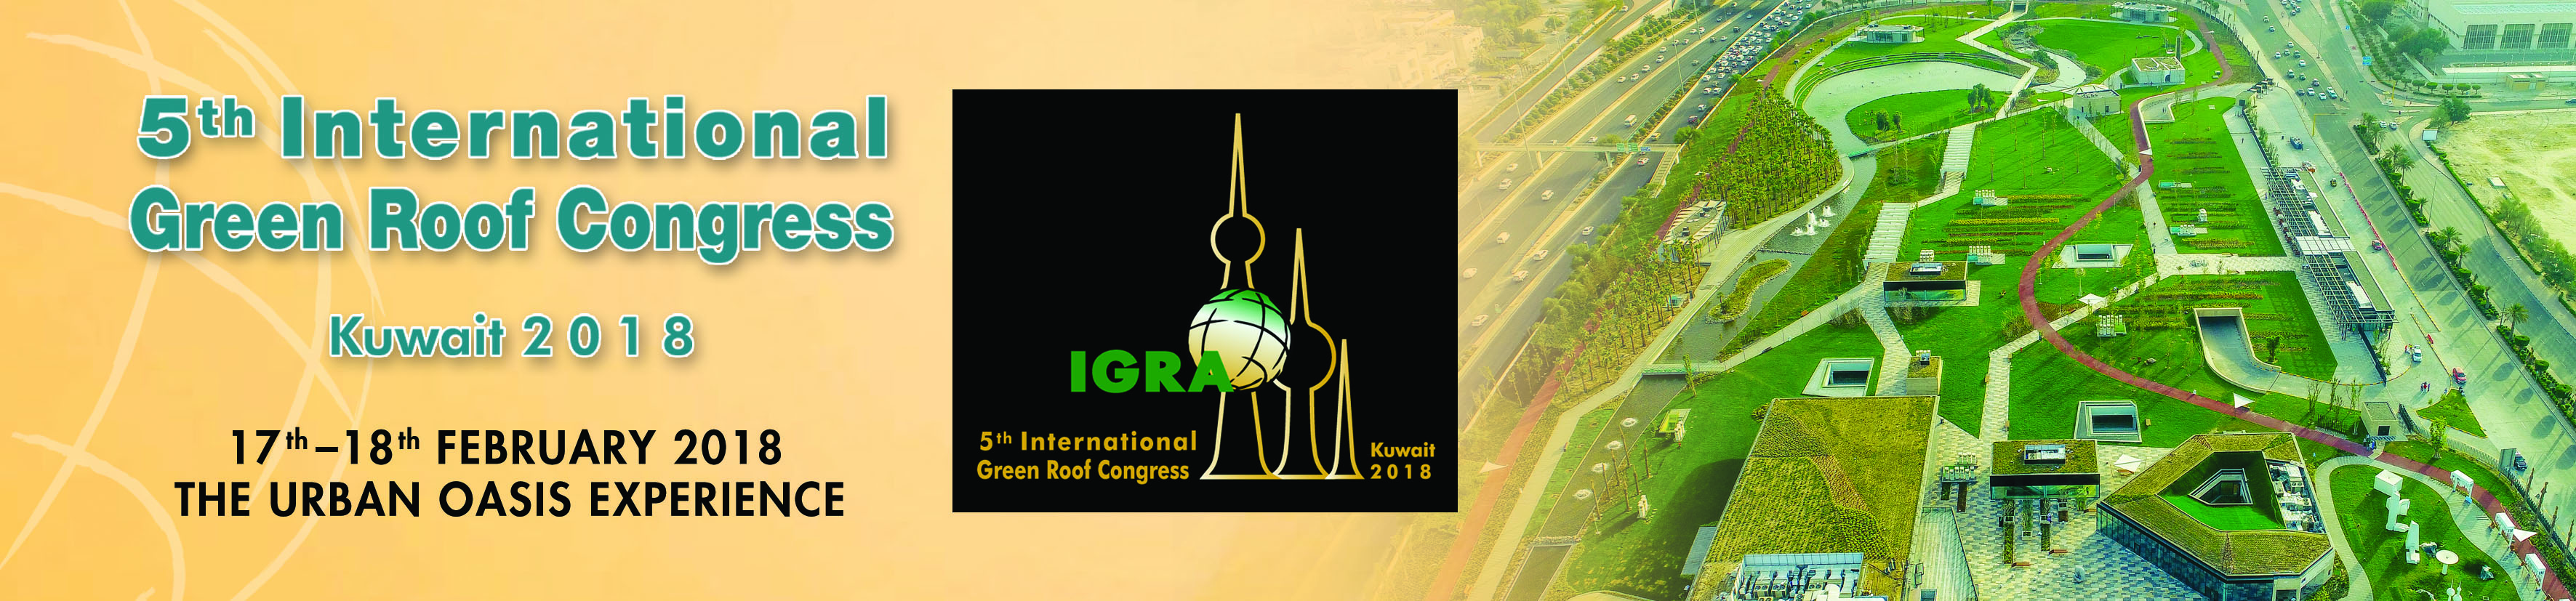 Patrick Blanc Will Speak International Green Roof Congress 2018 Kuwait